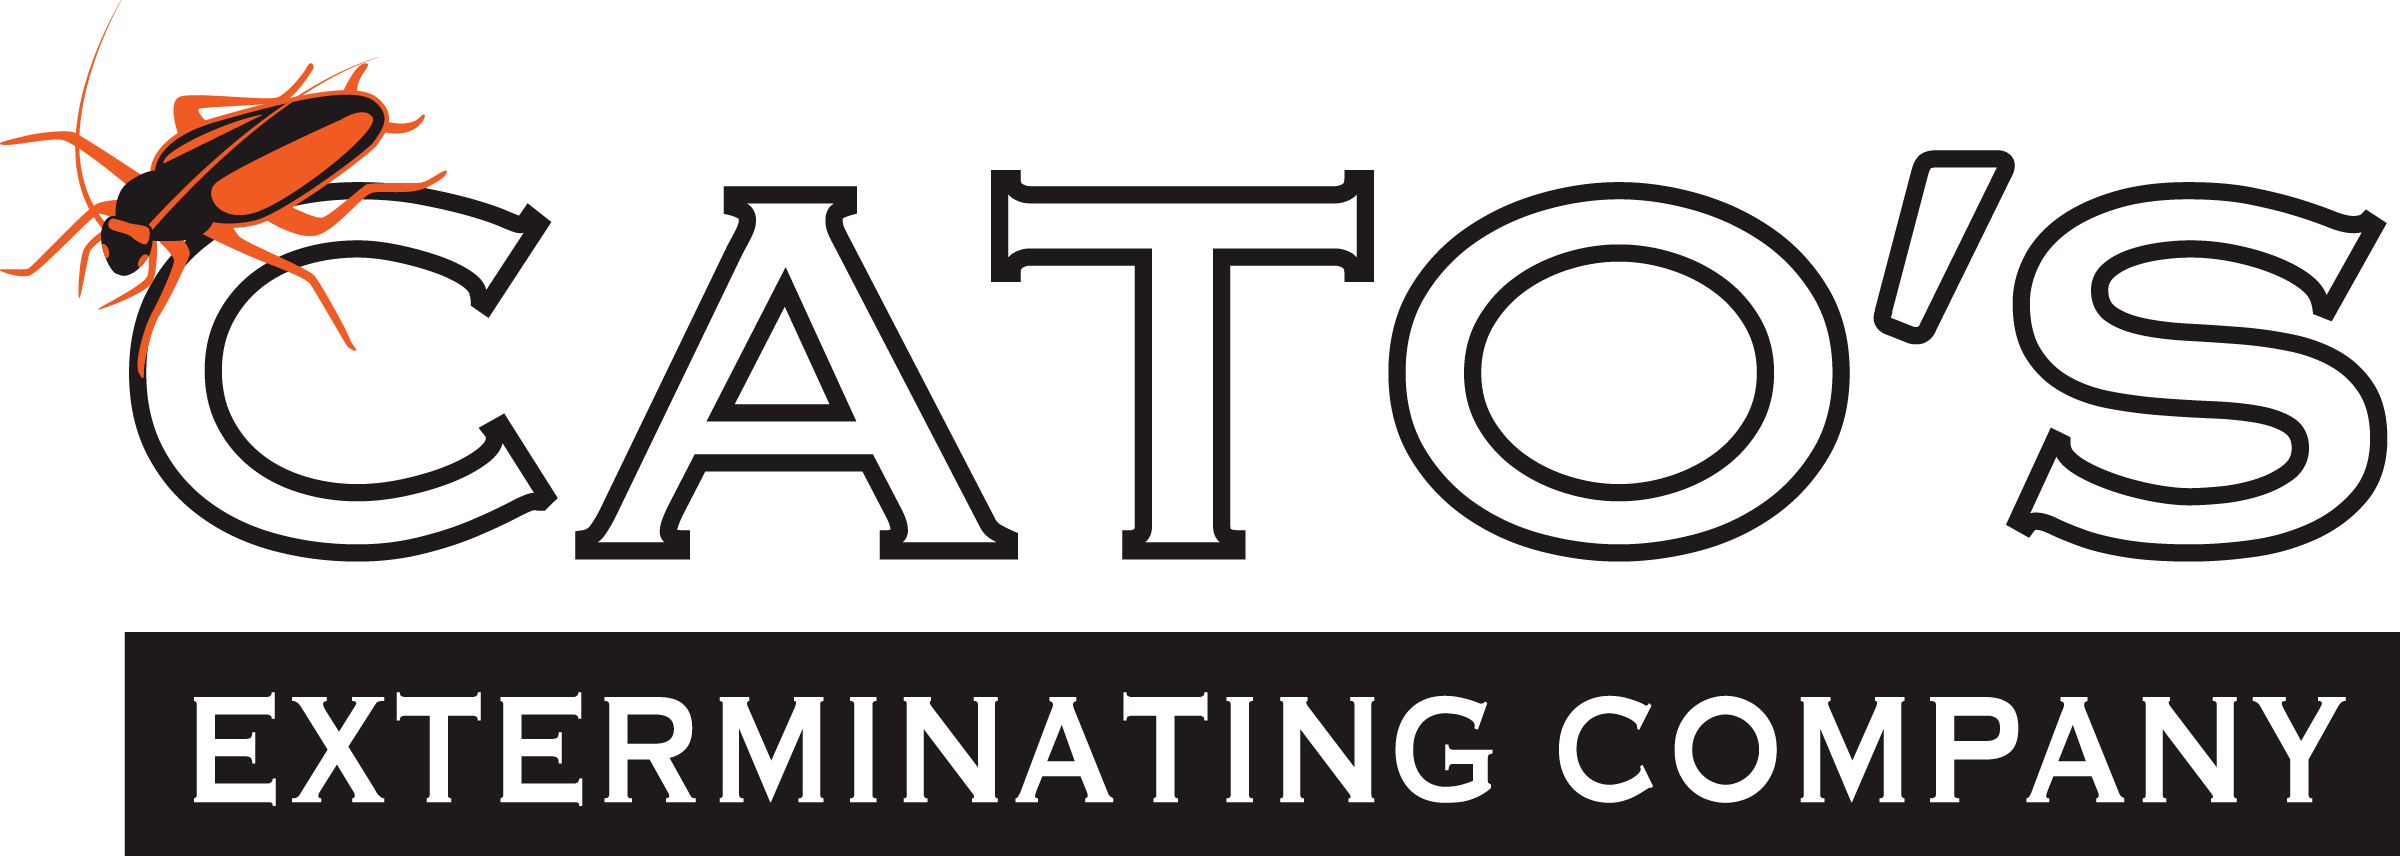 Cato Logo - Home - Cato's Exterminating